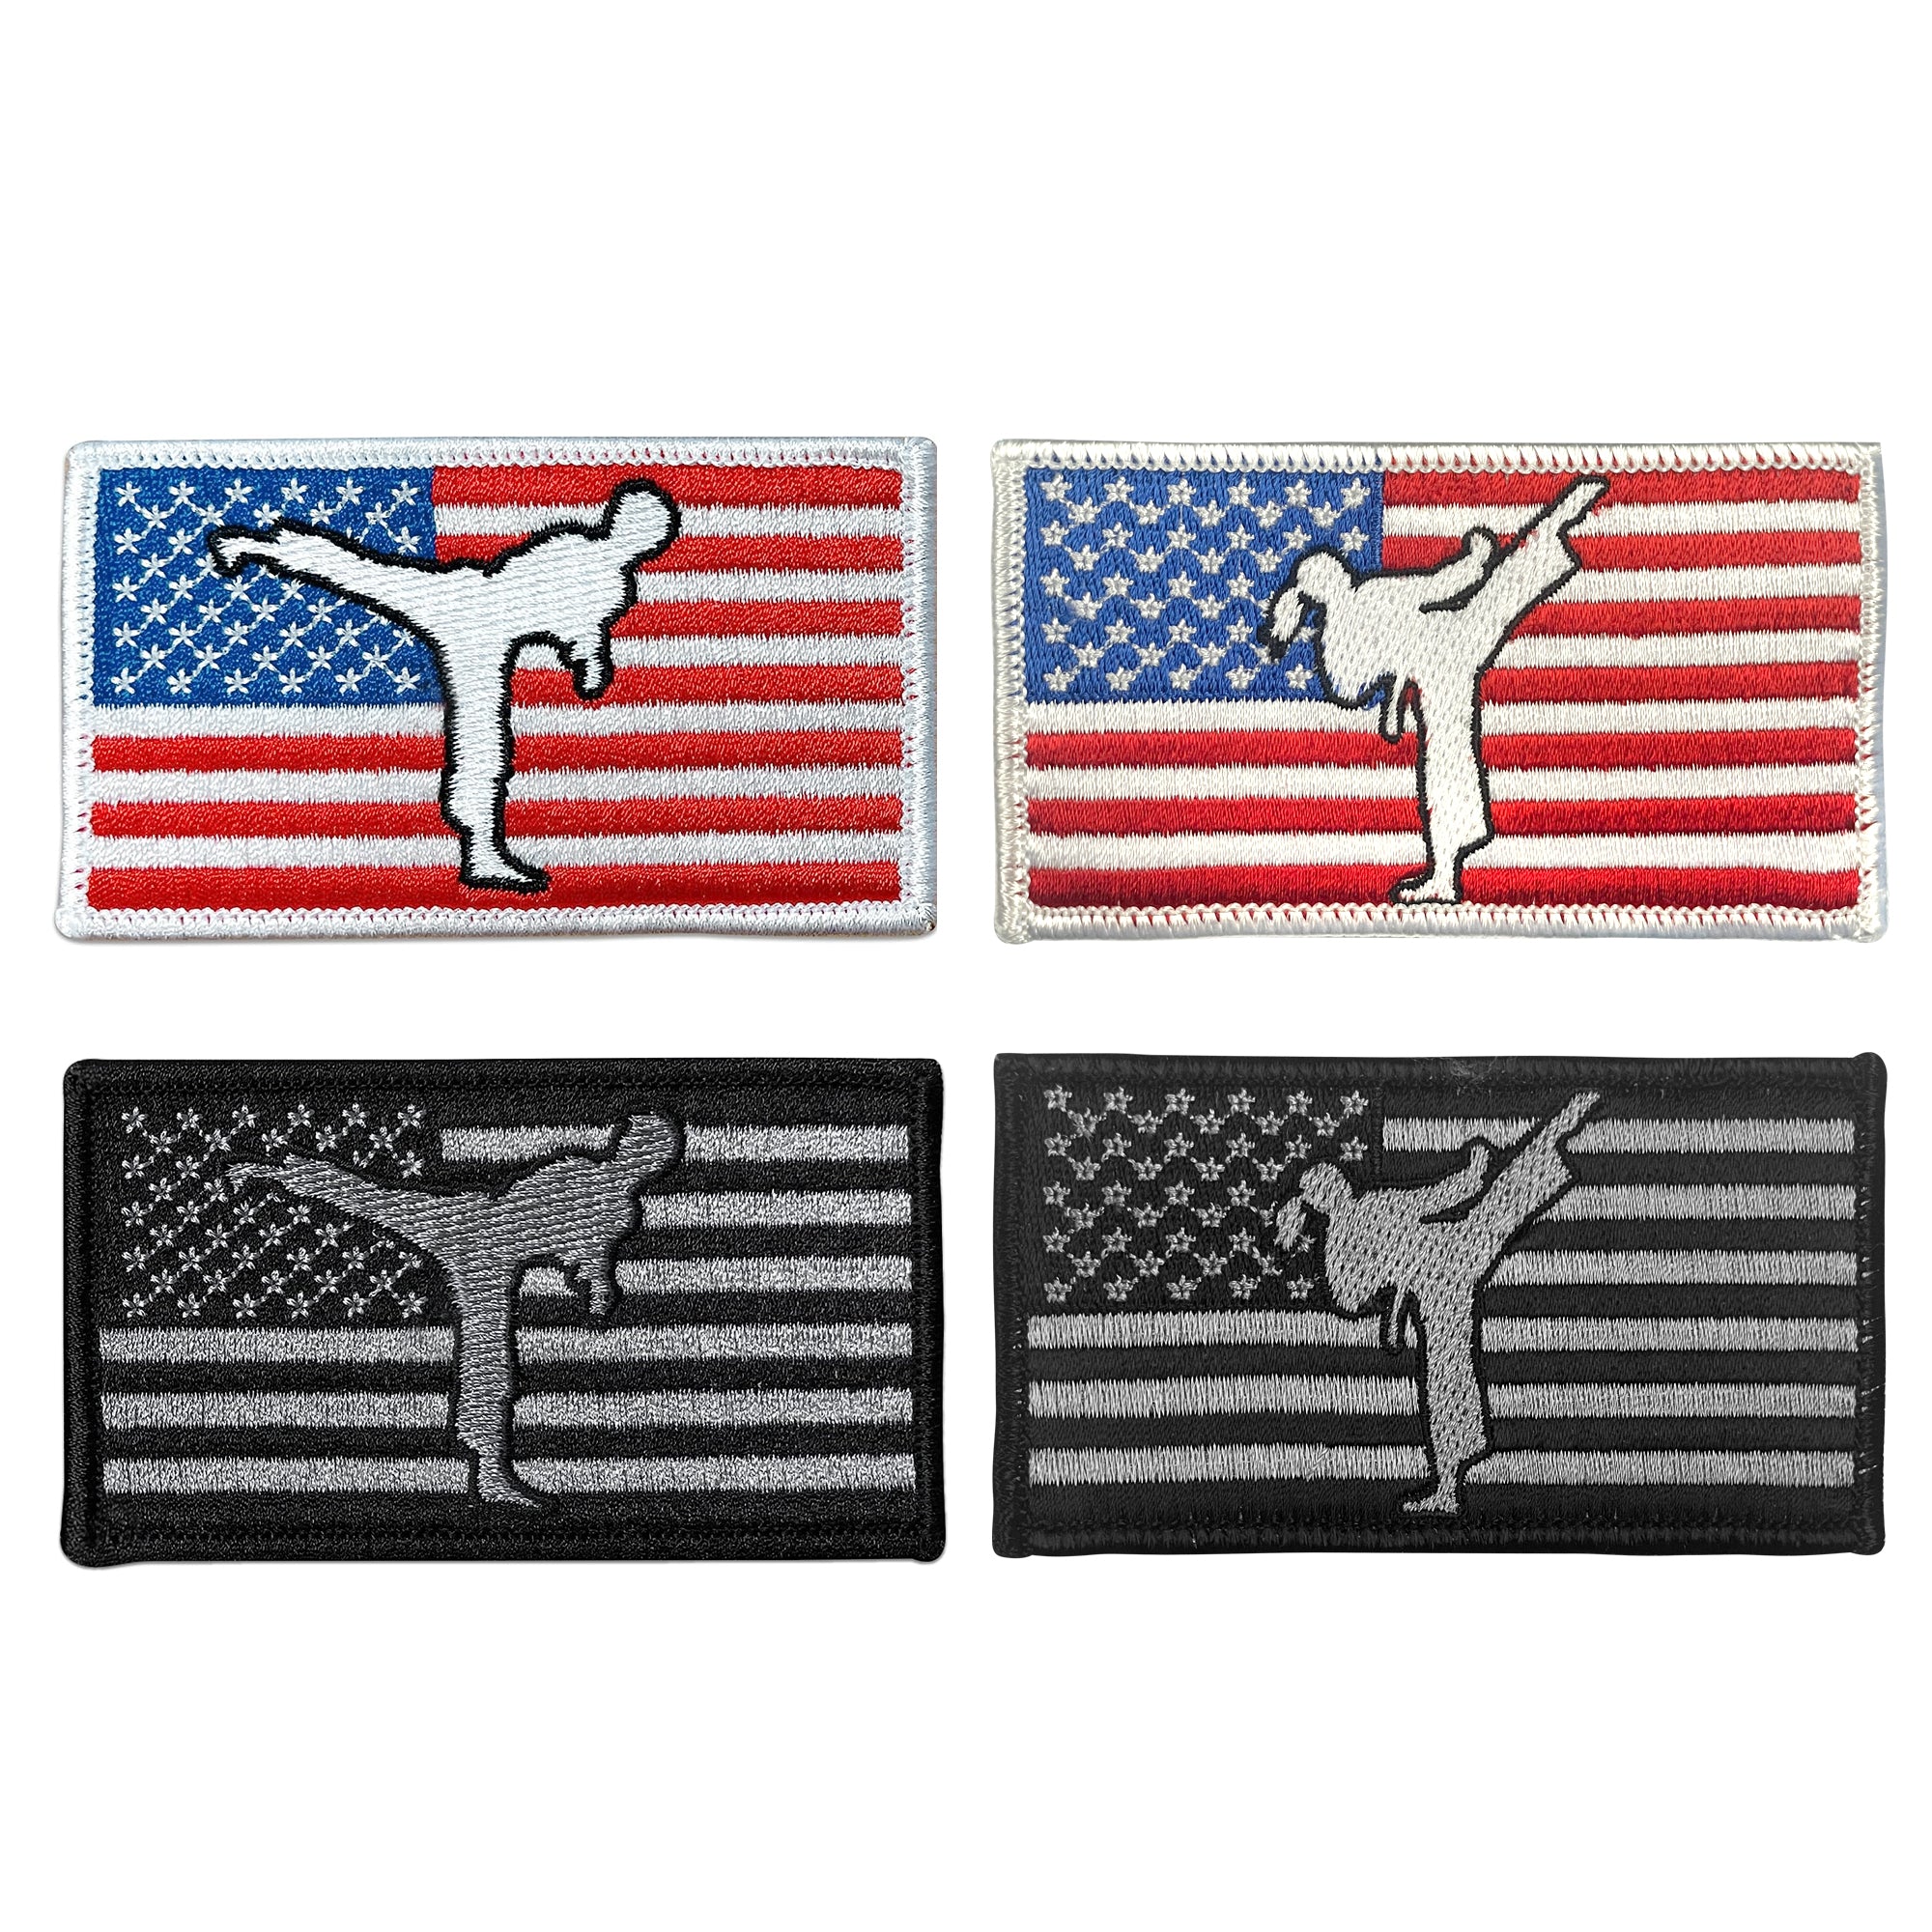 AAMA Taekwondo Kick USA Embroidered Flag Iron On Patch